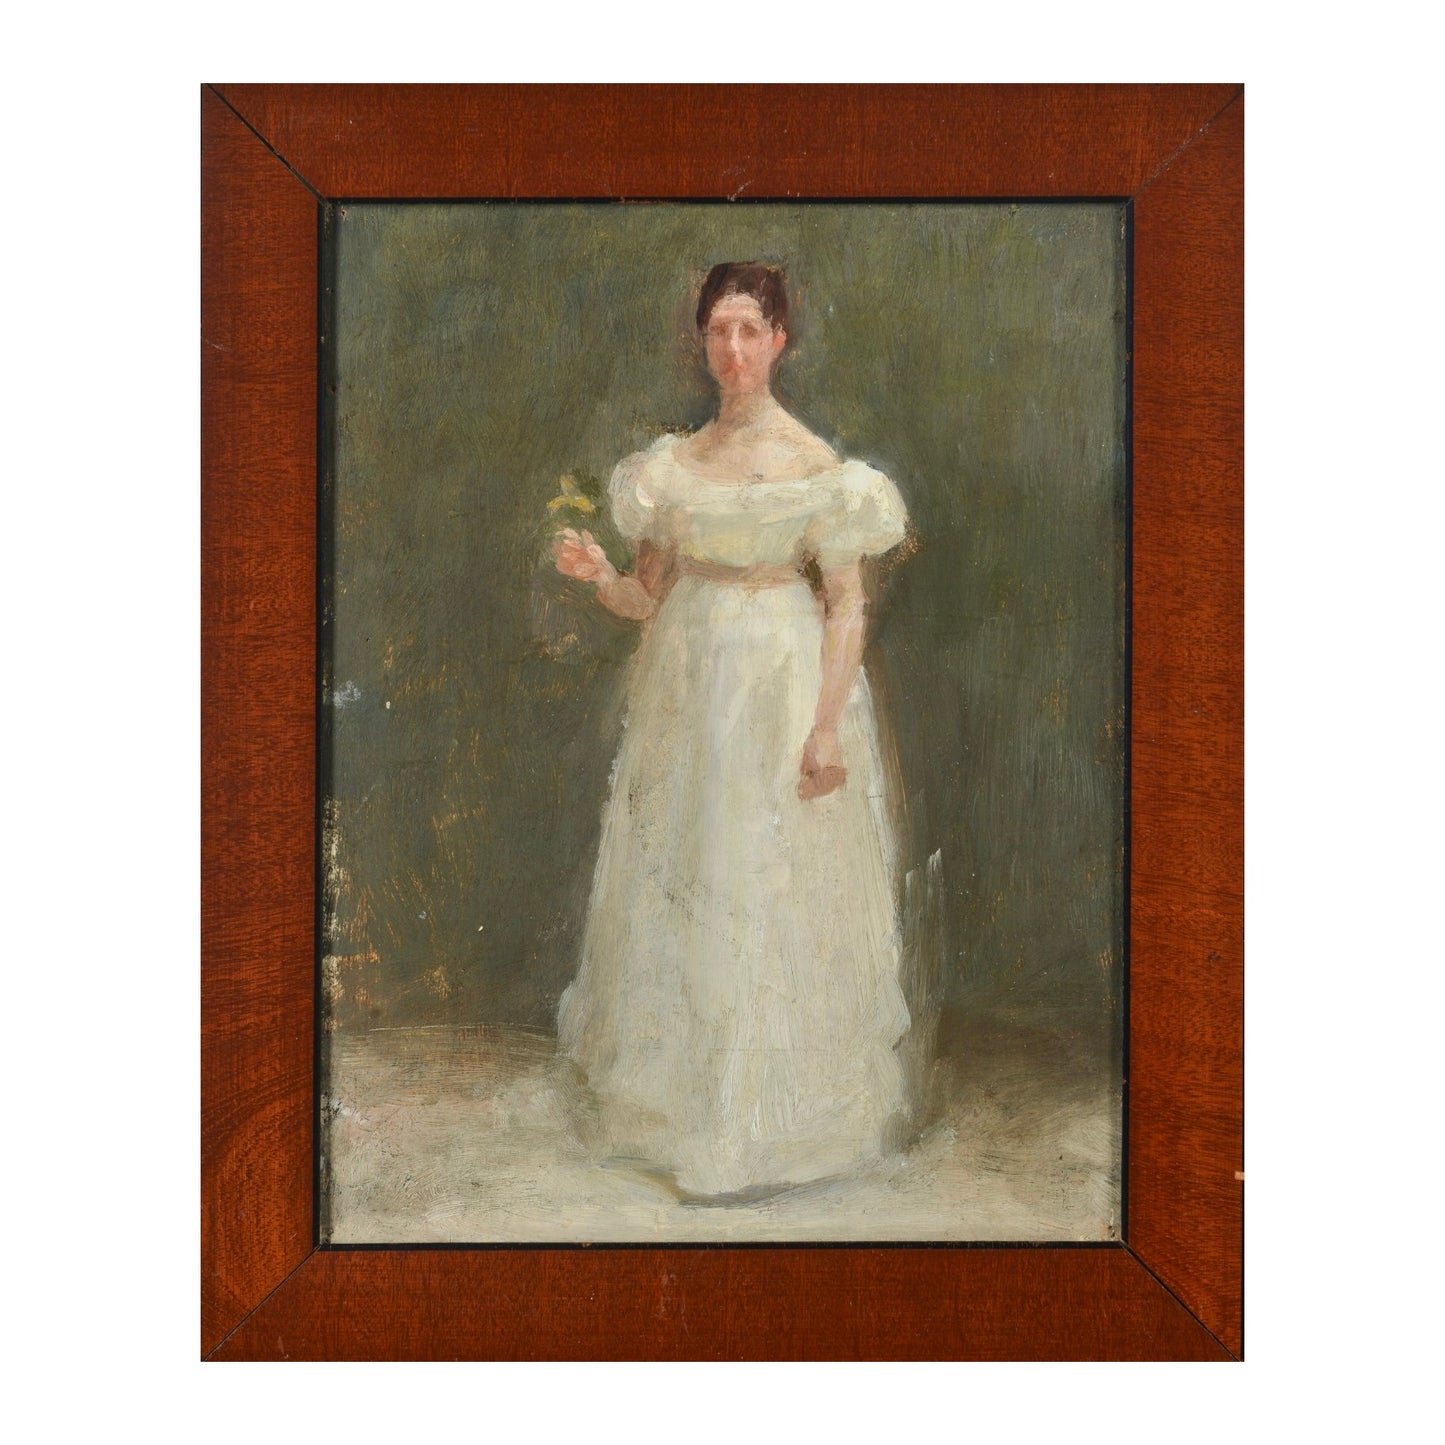 Julius Paulsen. A woman in white holding a flower, circa 1900